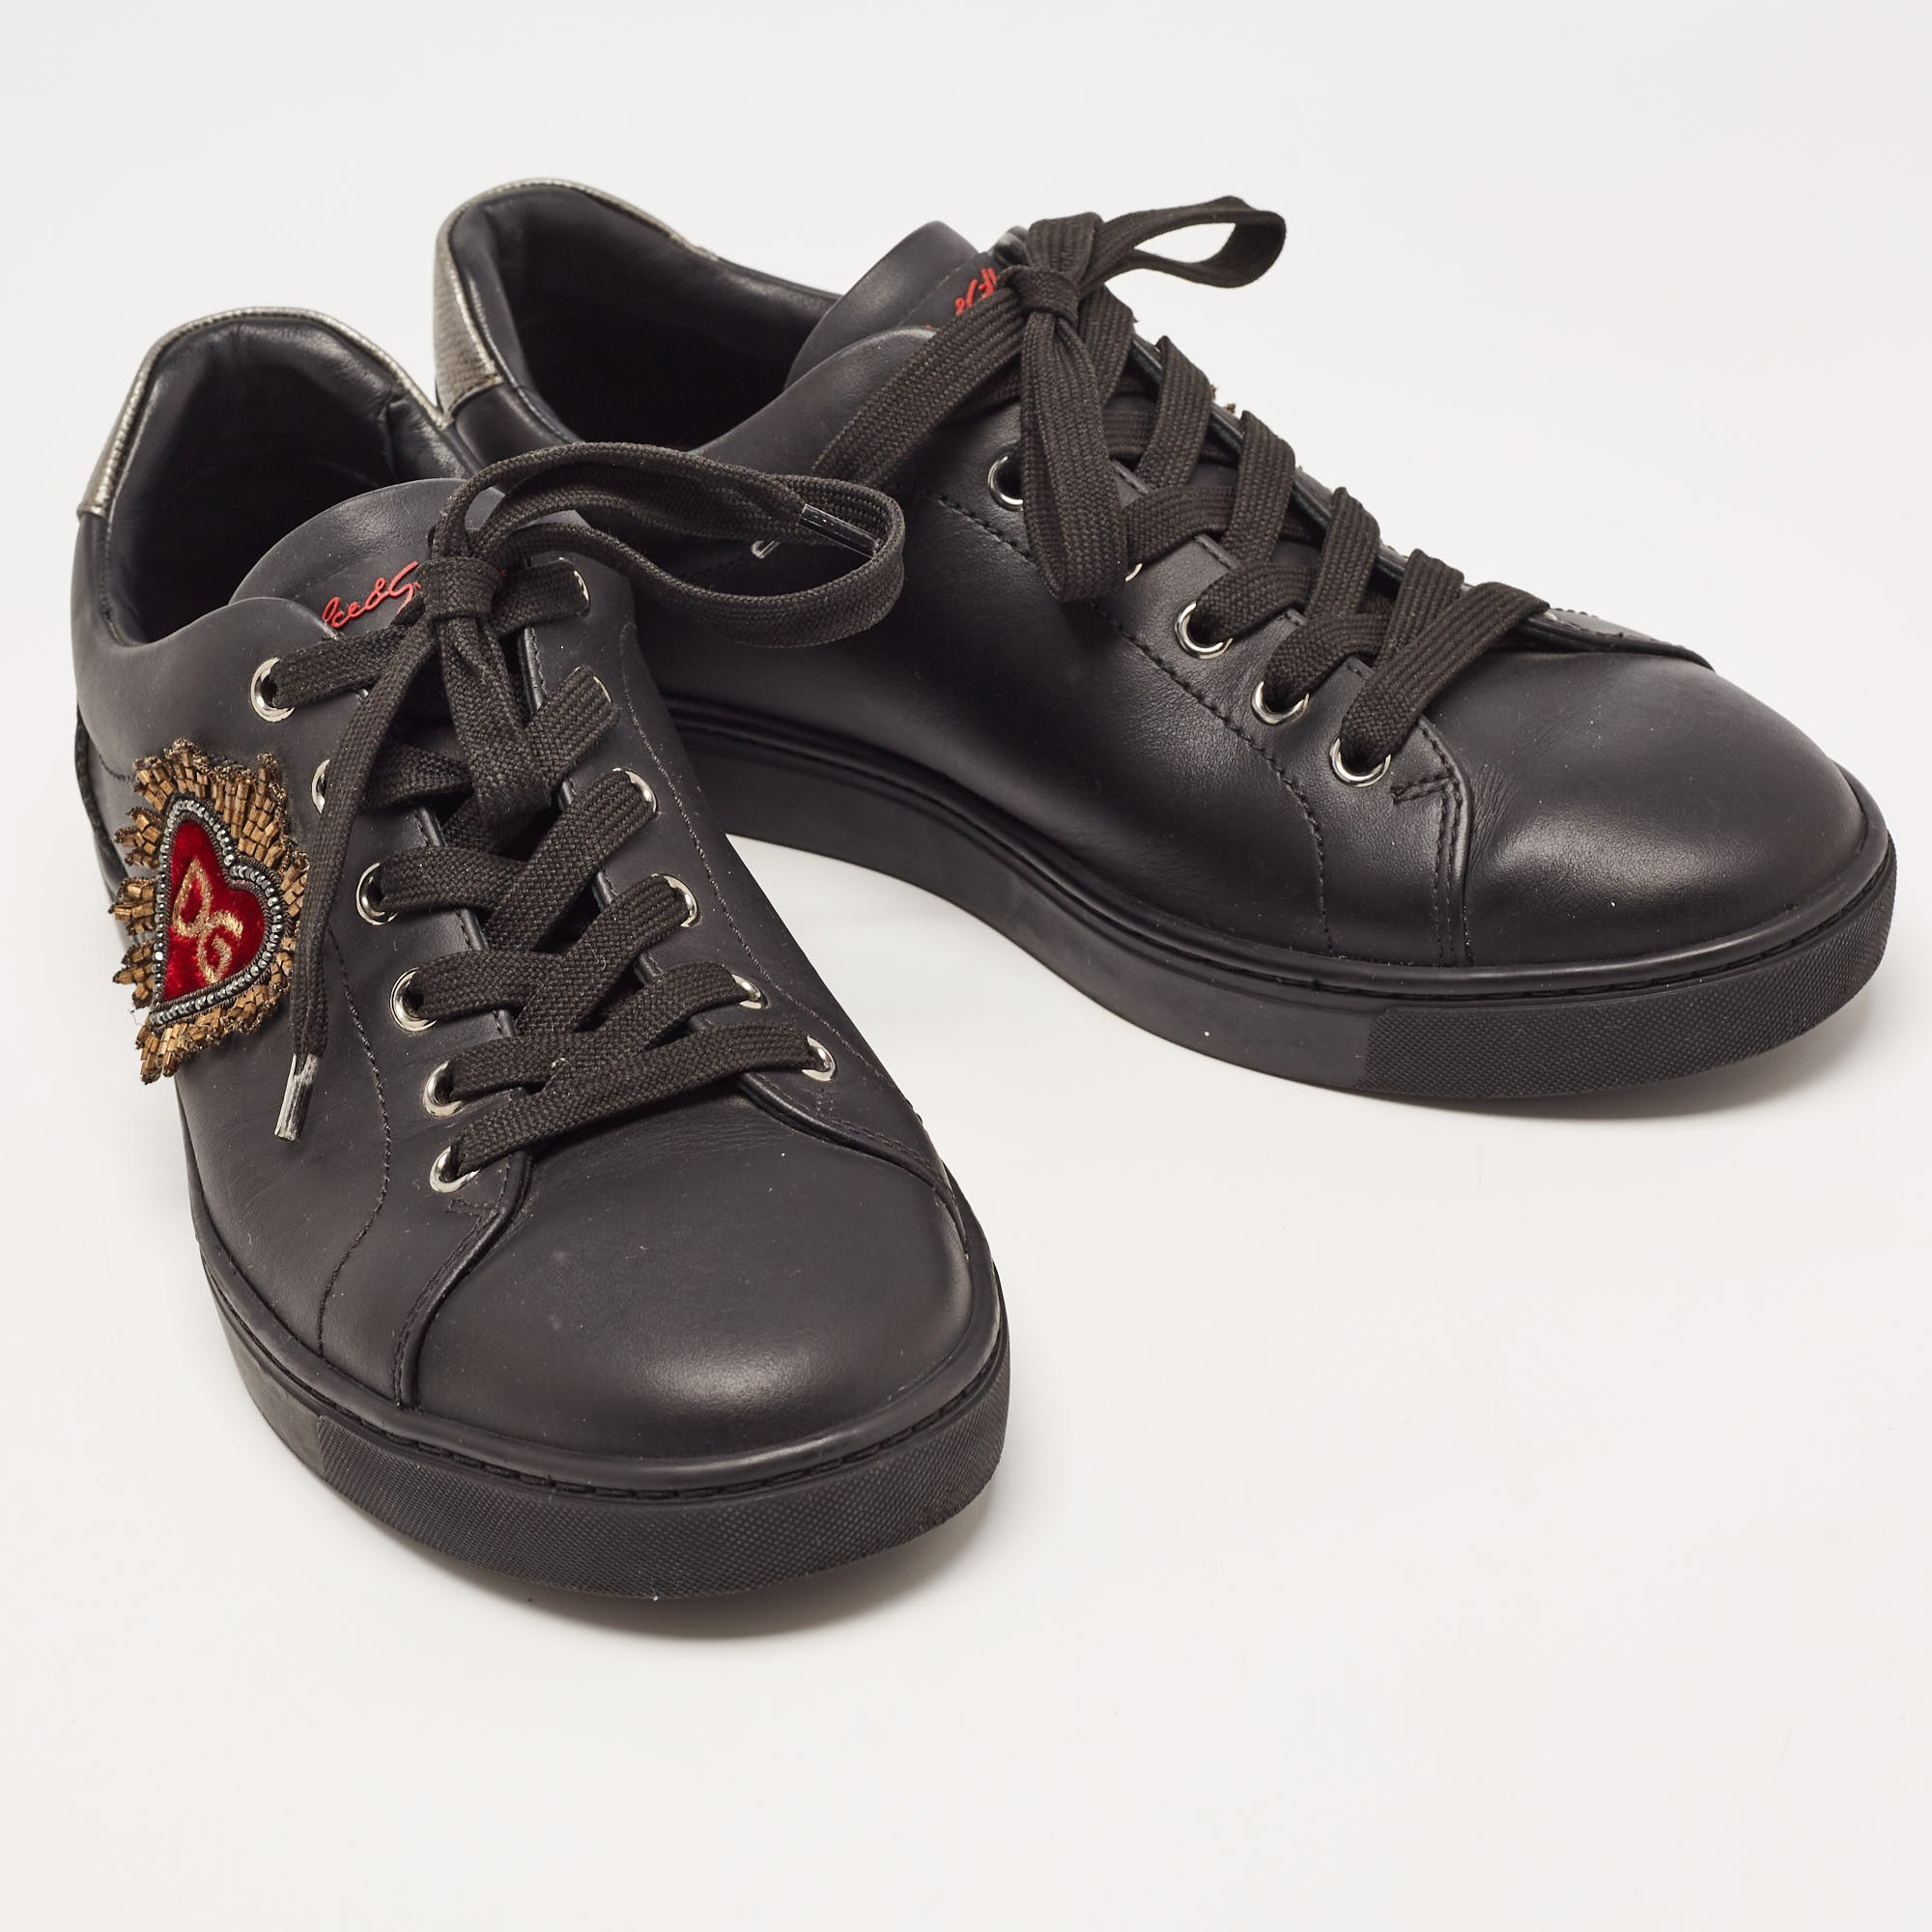 Dolce & Gabbana Black Leather DG Heart Sneakers Size 40